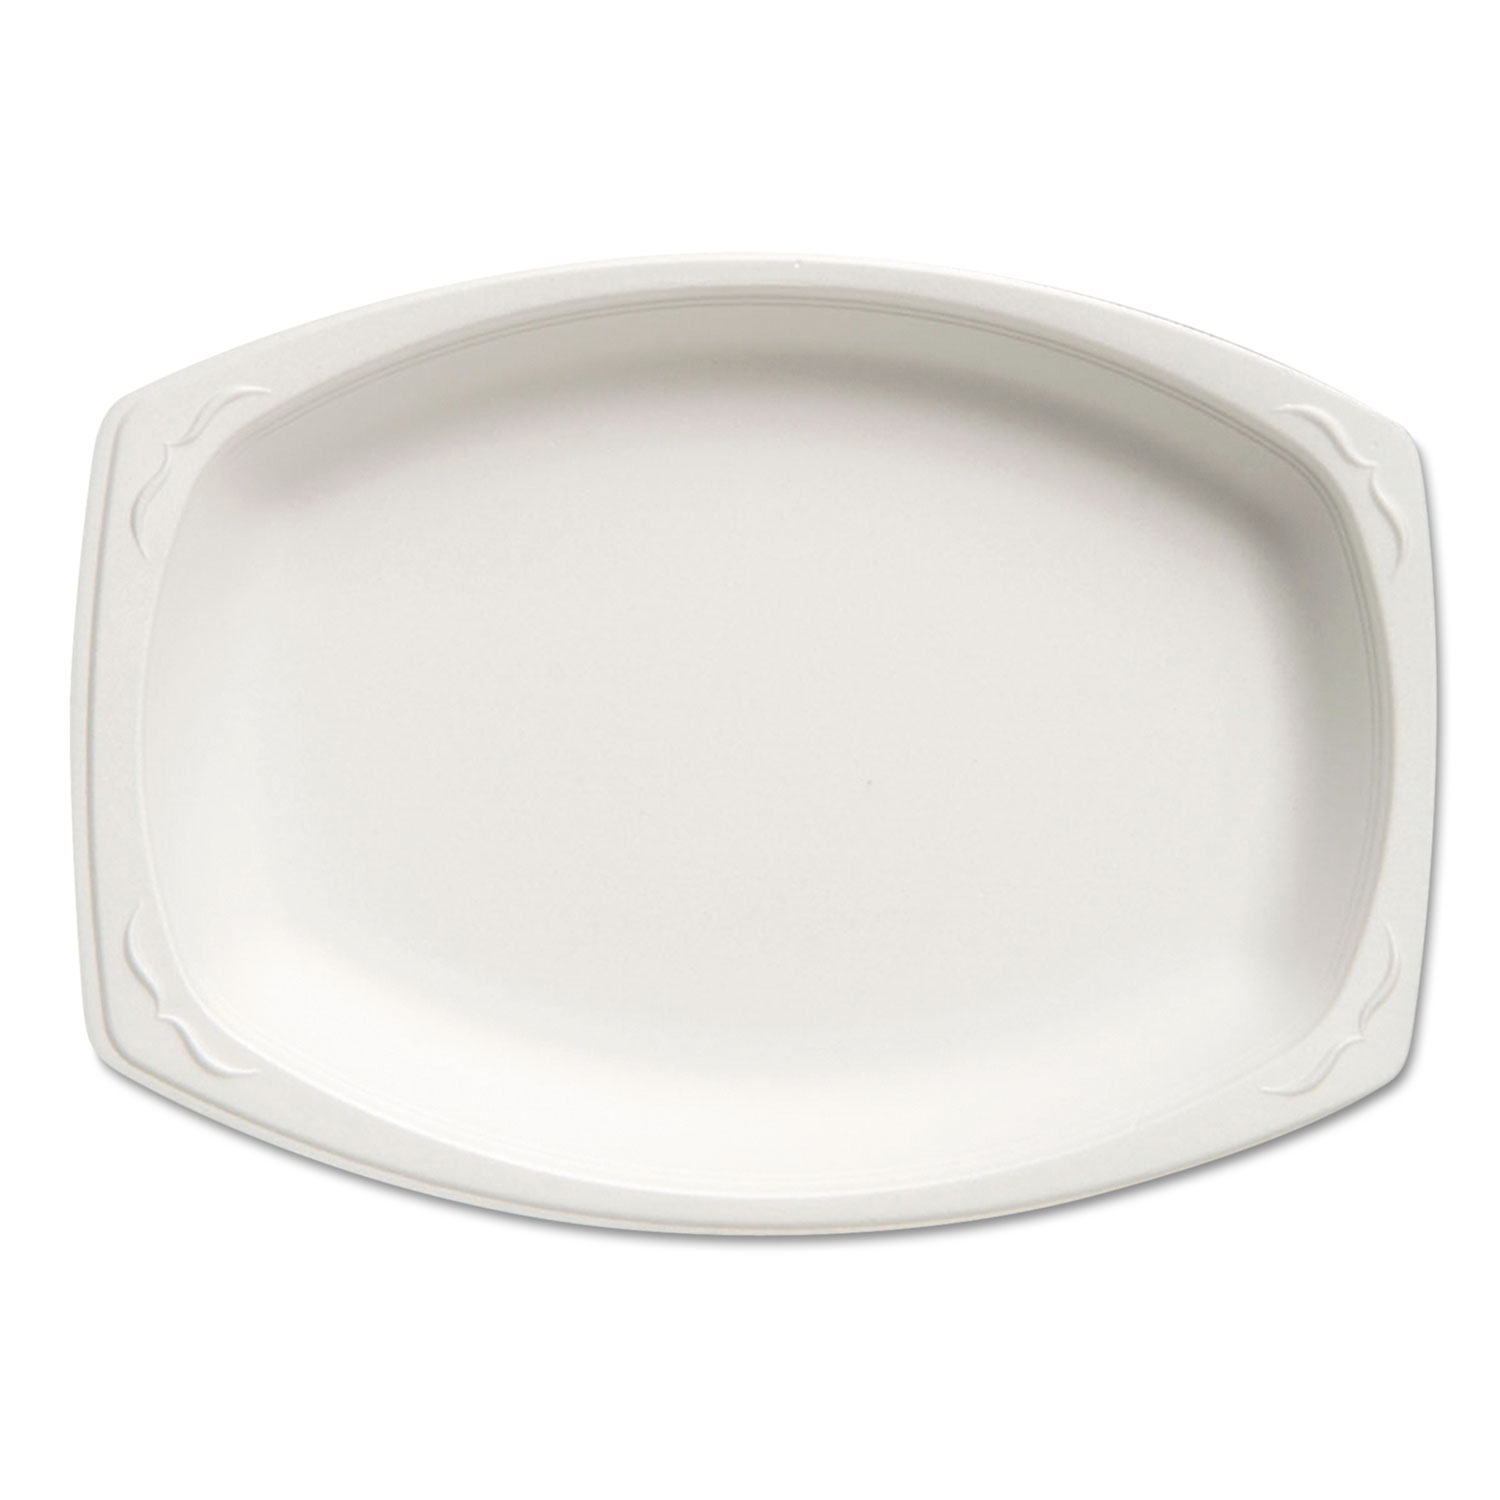  Genpak 87900--- Celebrity Foam Platters, 7 x 9, White, 125/Pack, 4 Packs/Carton (GNP87900) 